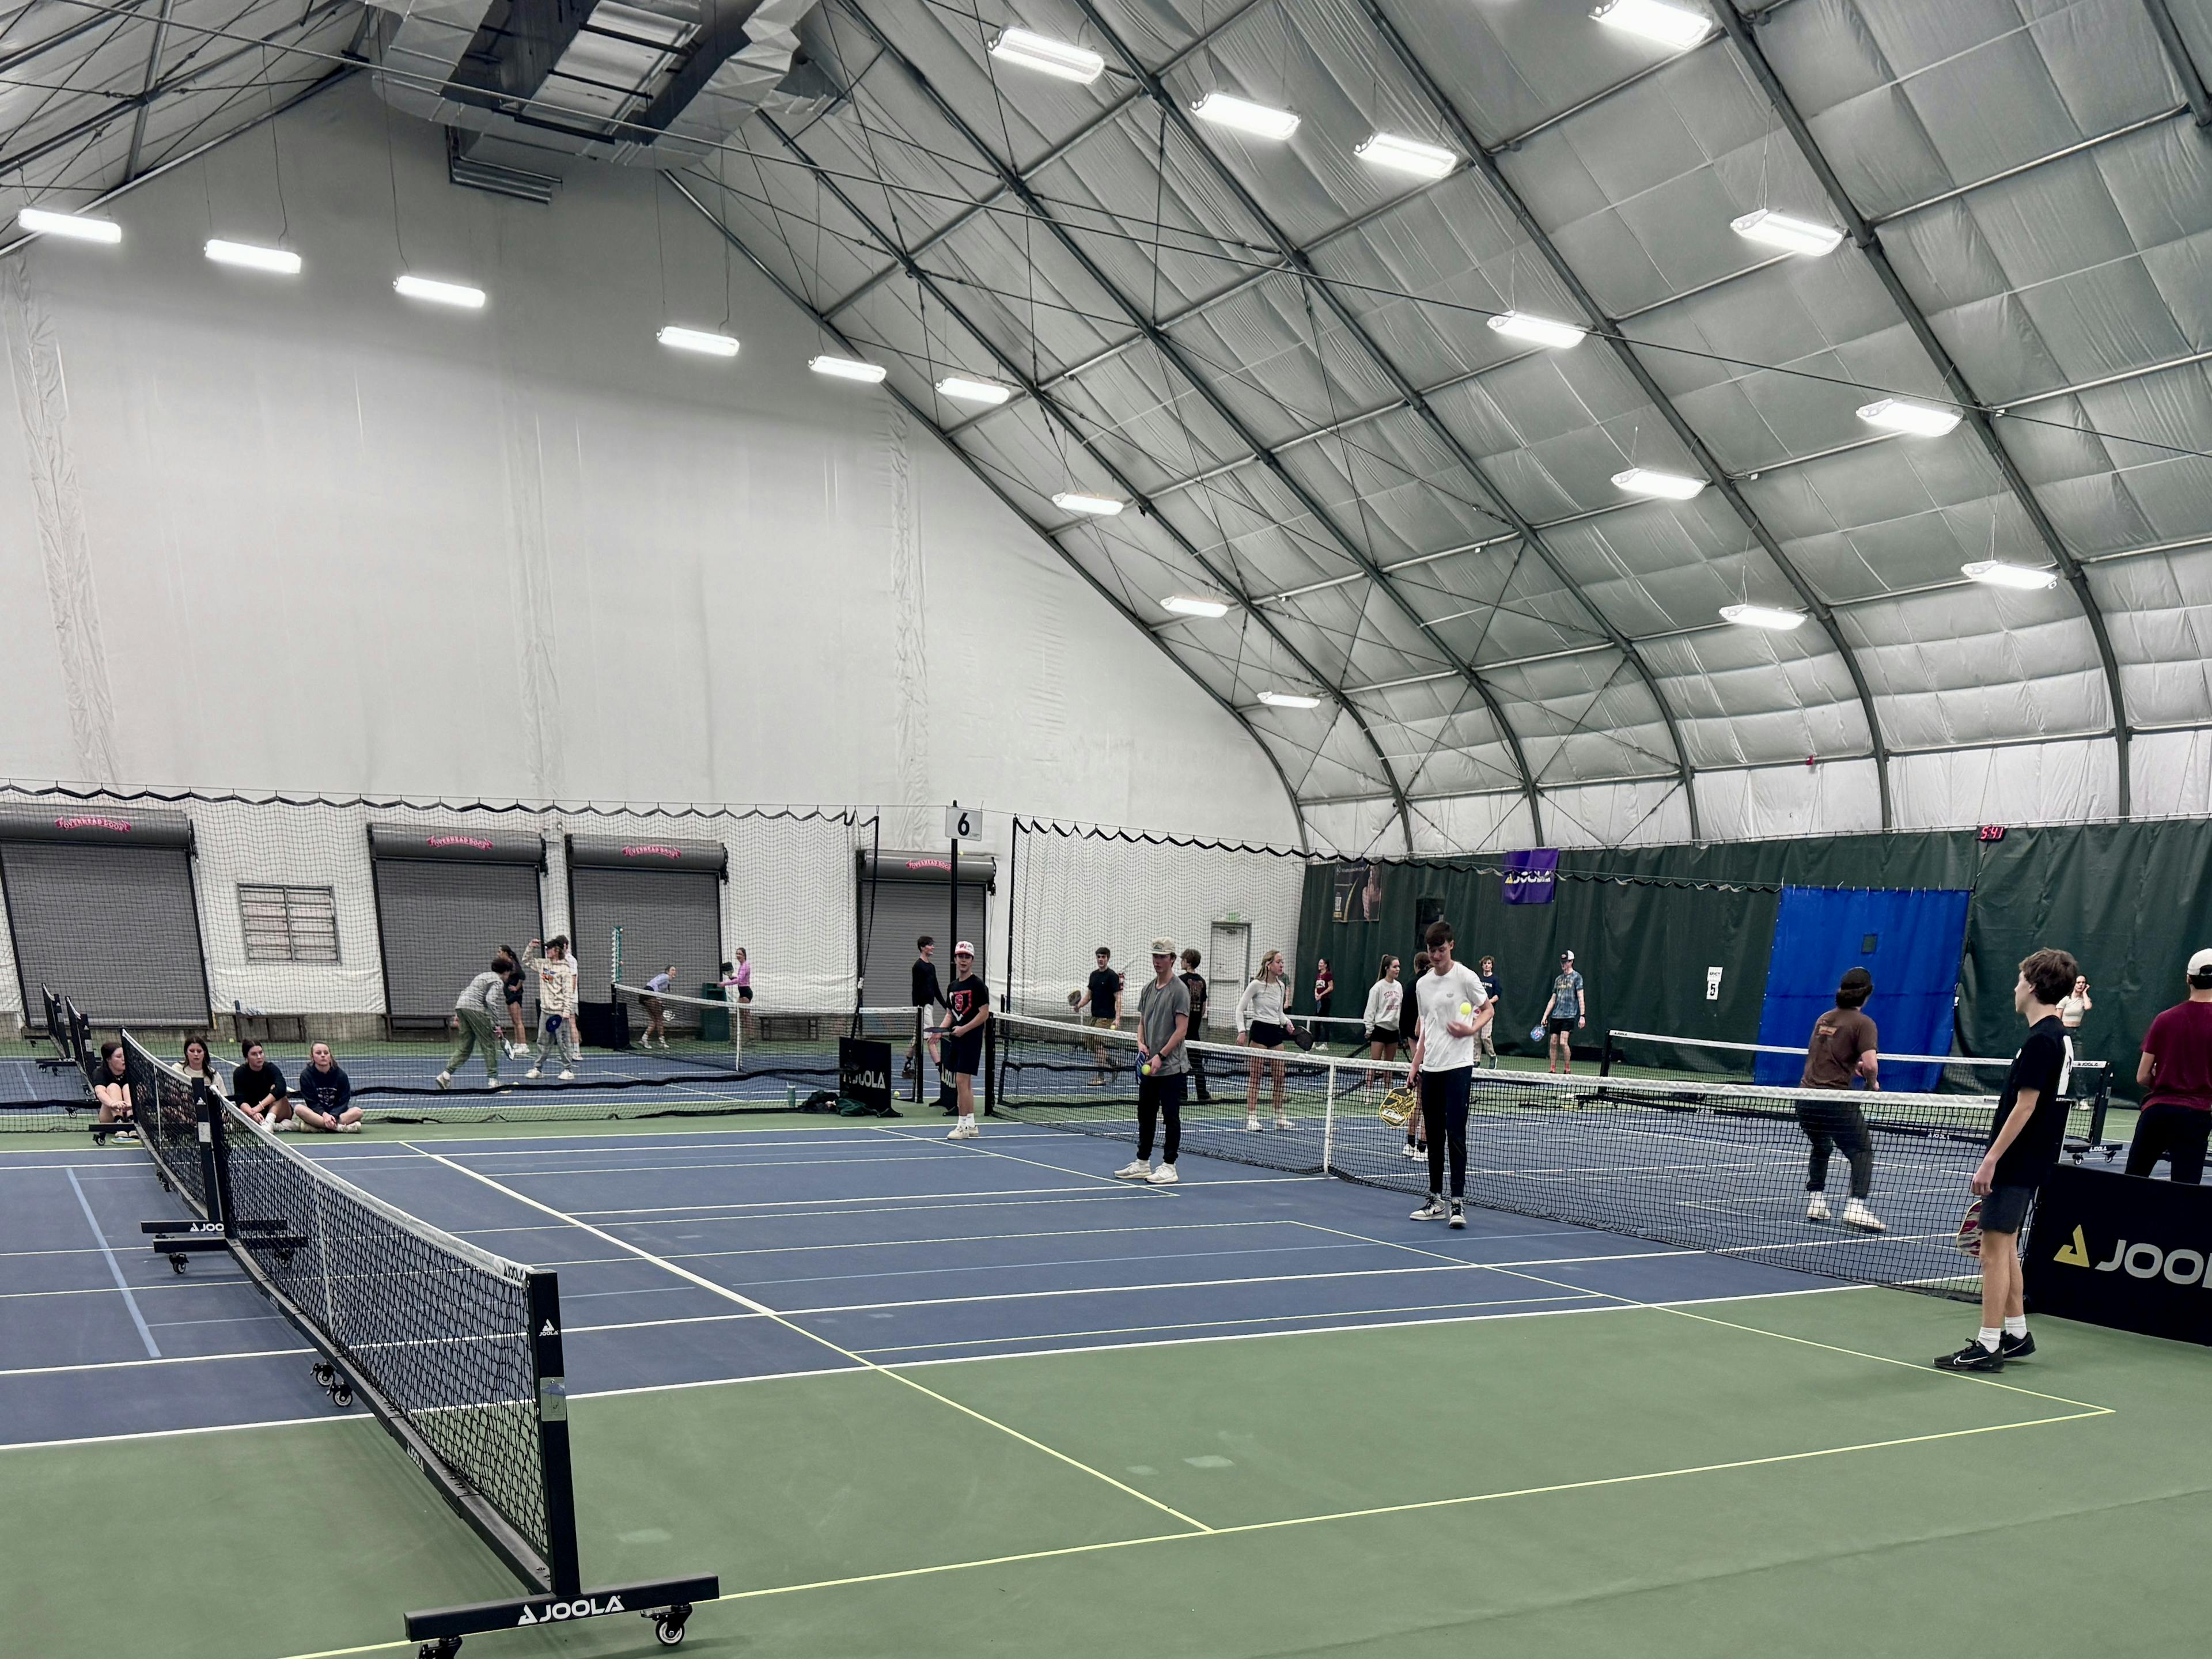 Image 4 of 8 of Steamboat Springs Tennis & Pickleball Center court